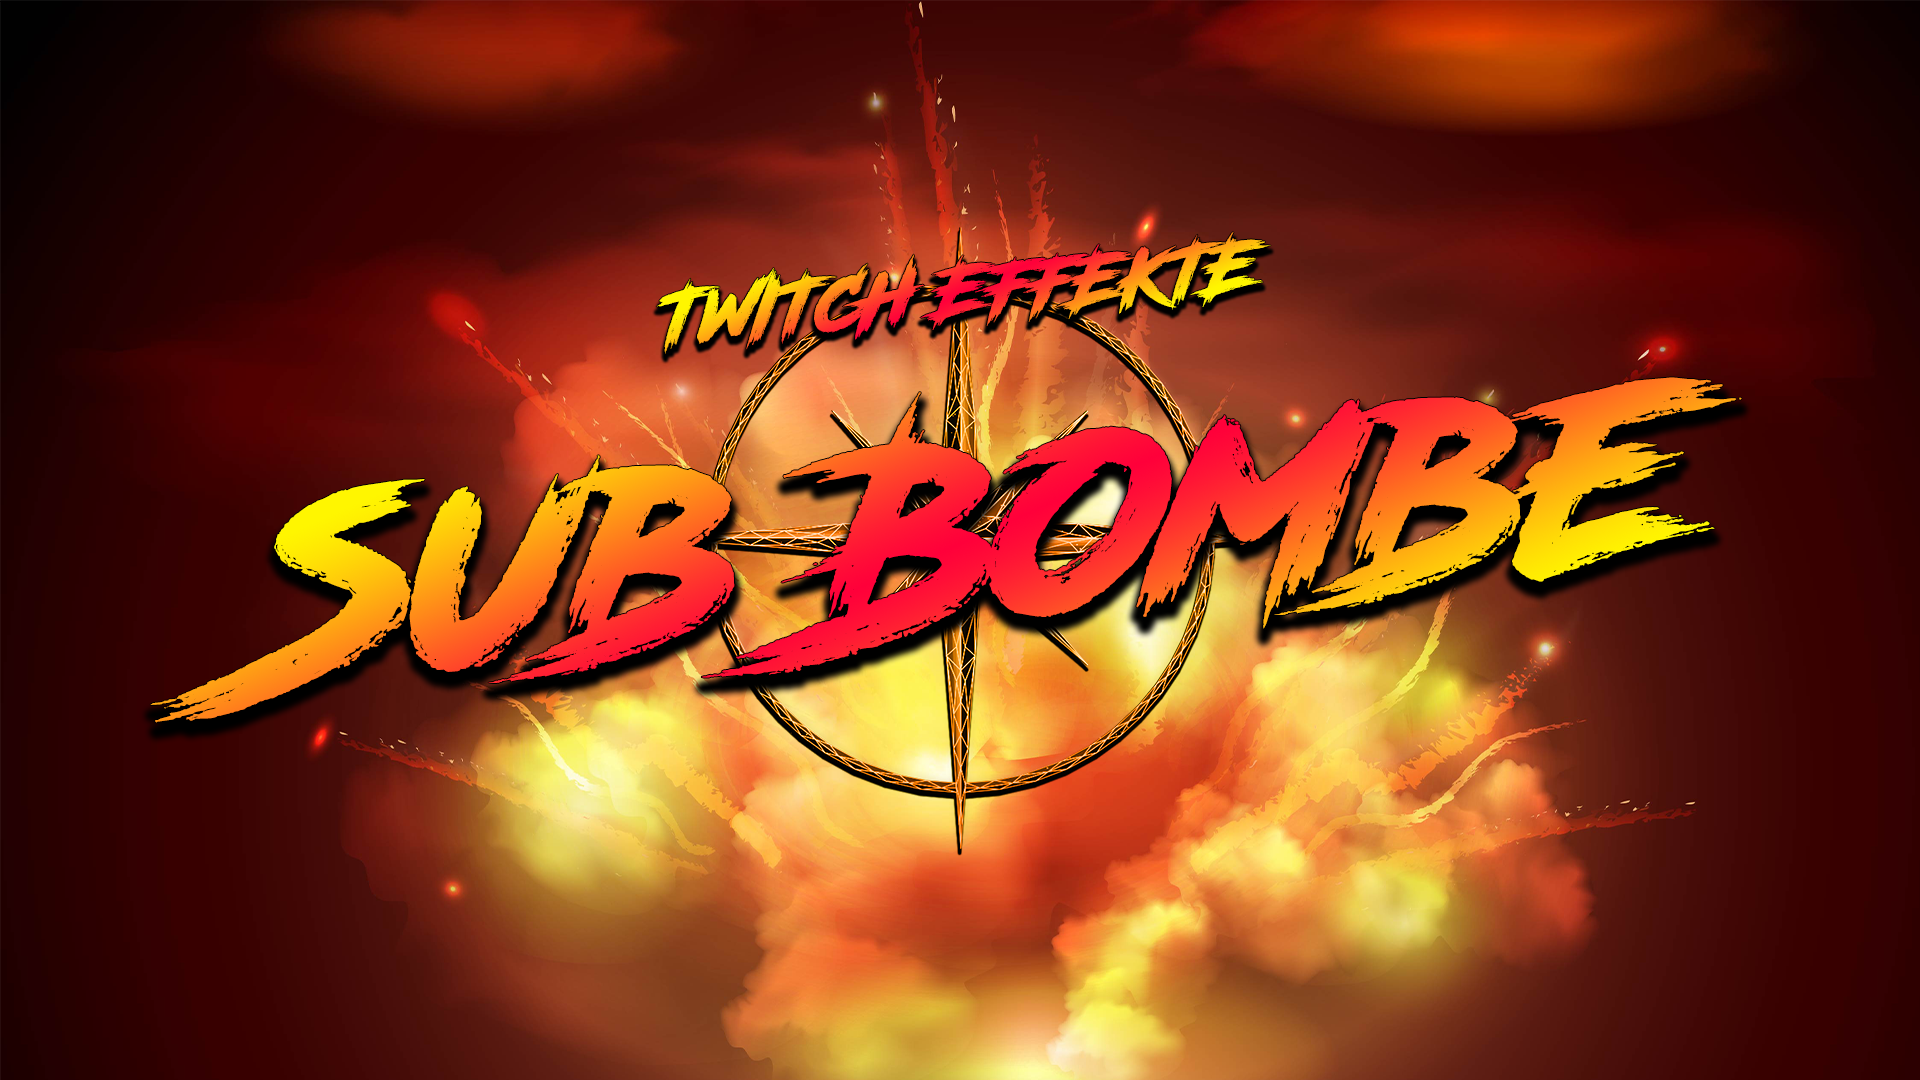 Twitch Trailer - Sub Bombe